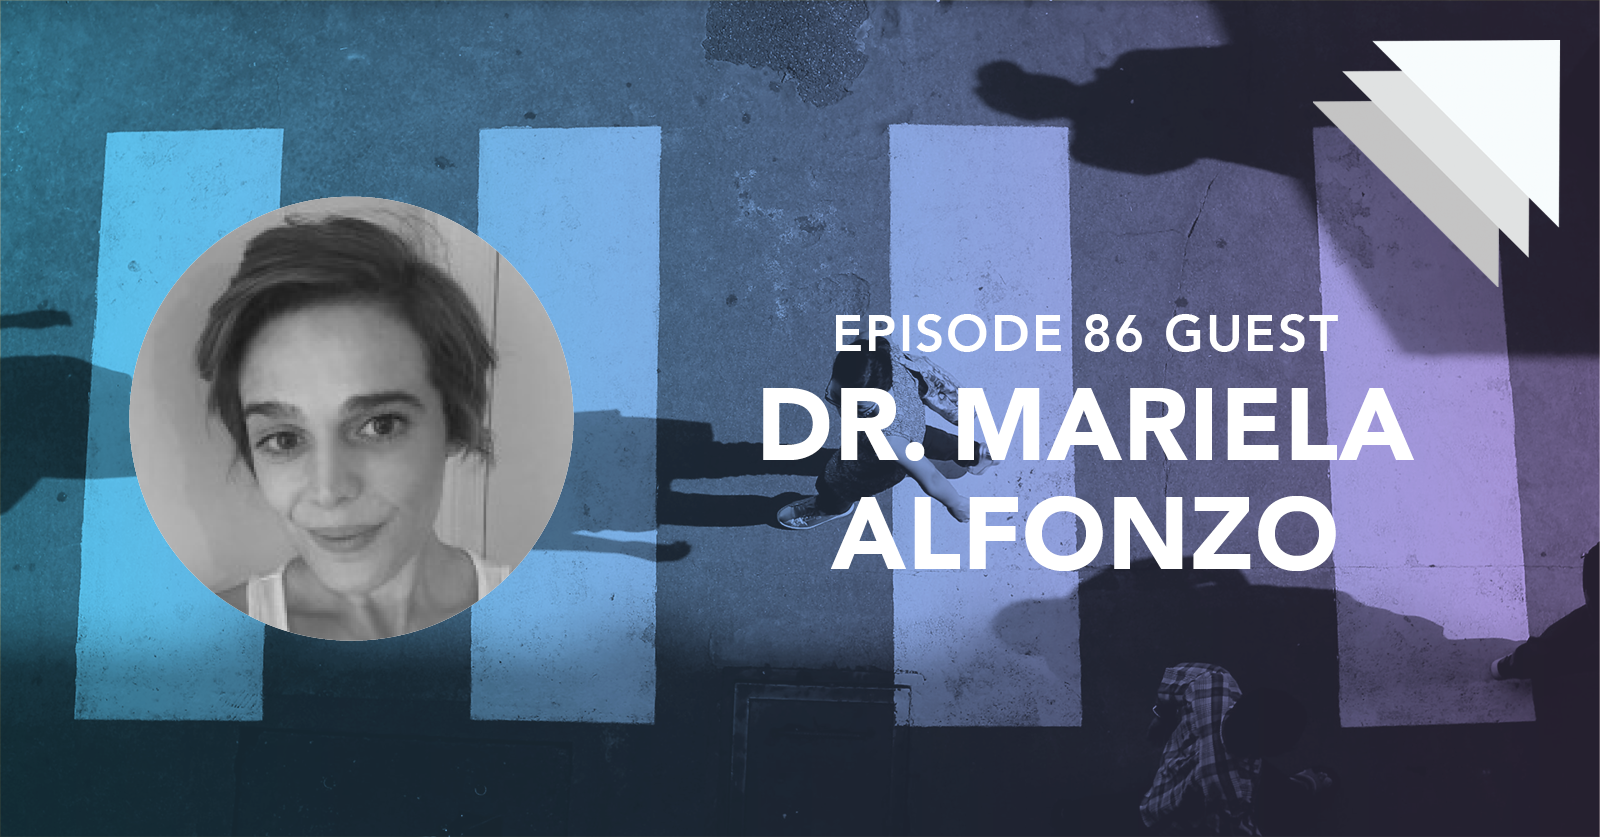 Episode 86 guest Dr. Mariela Alfonzo